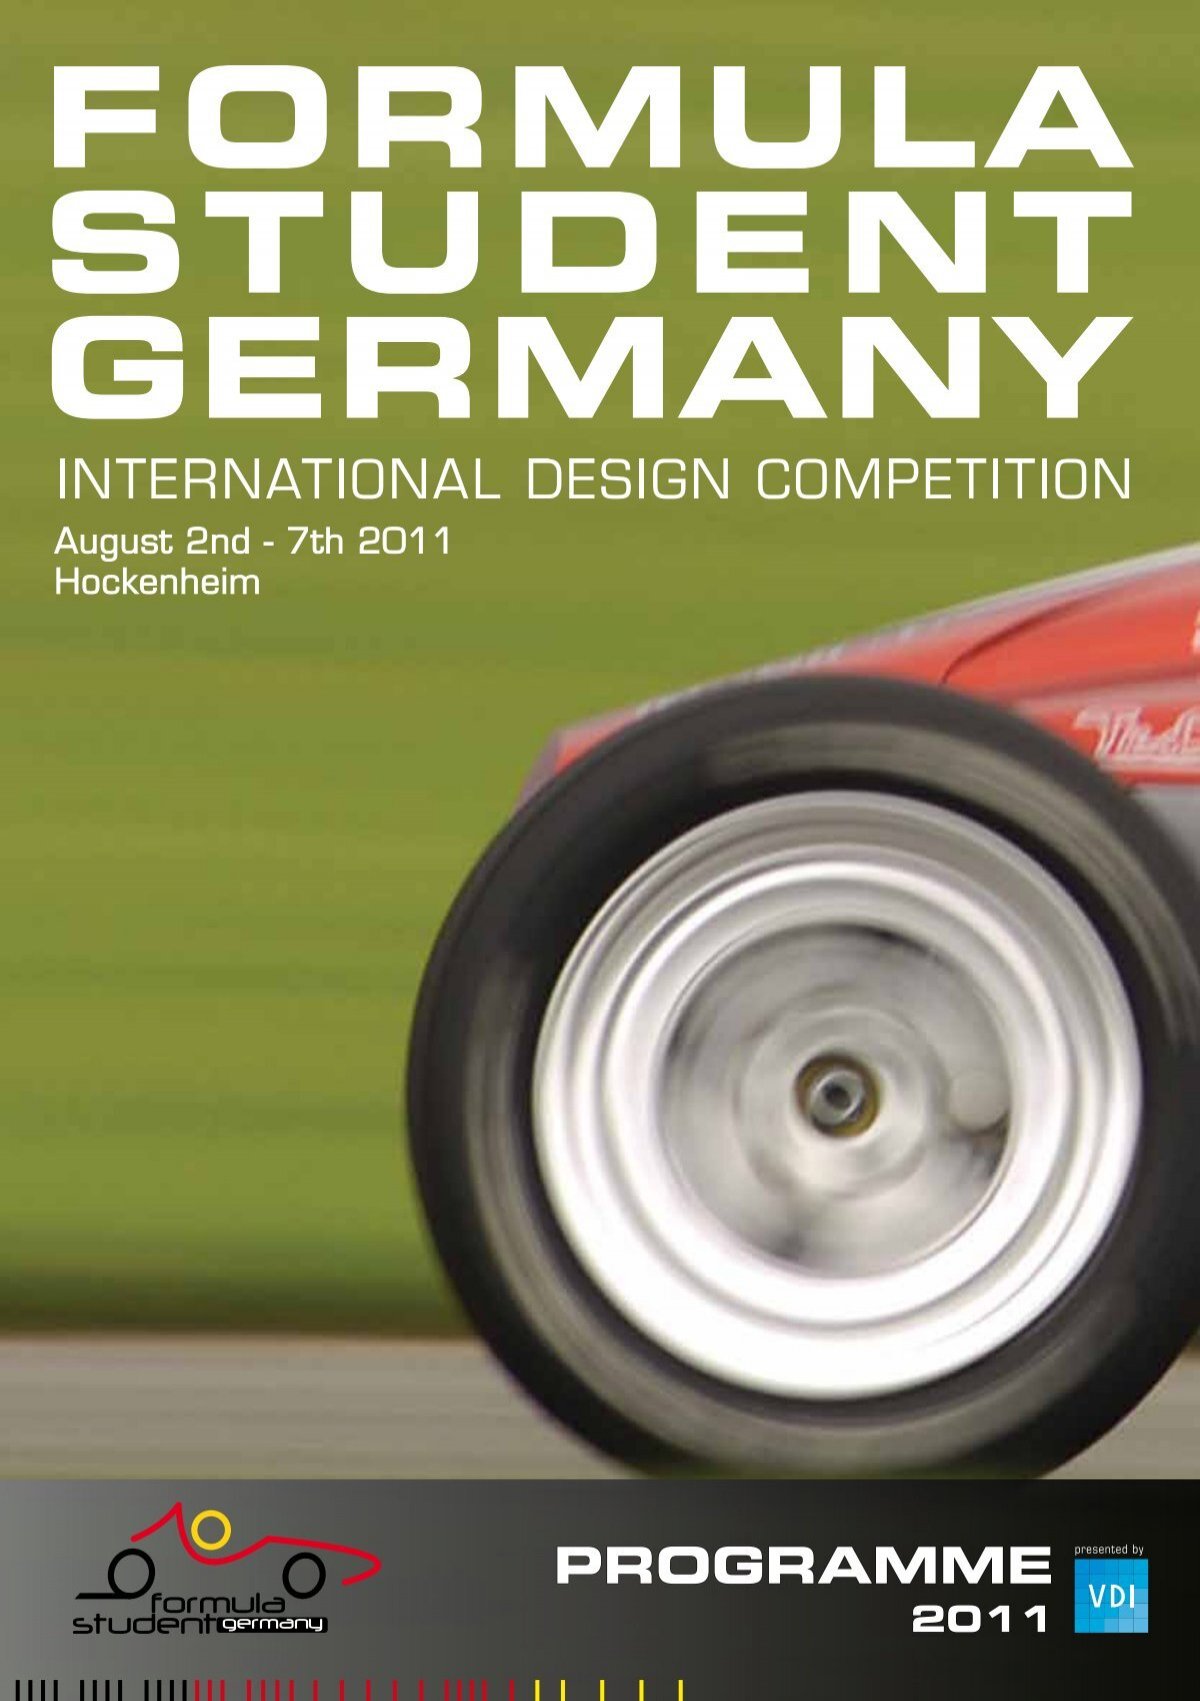 PROGRAMME 2011 - Formula Student Germany